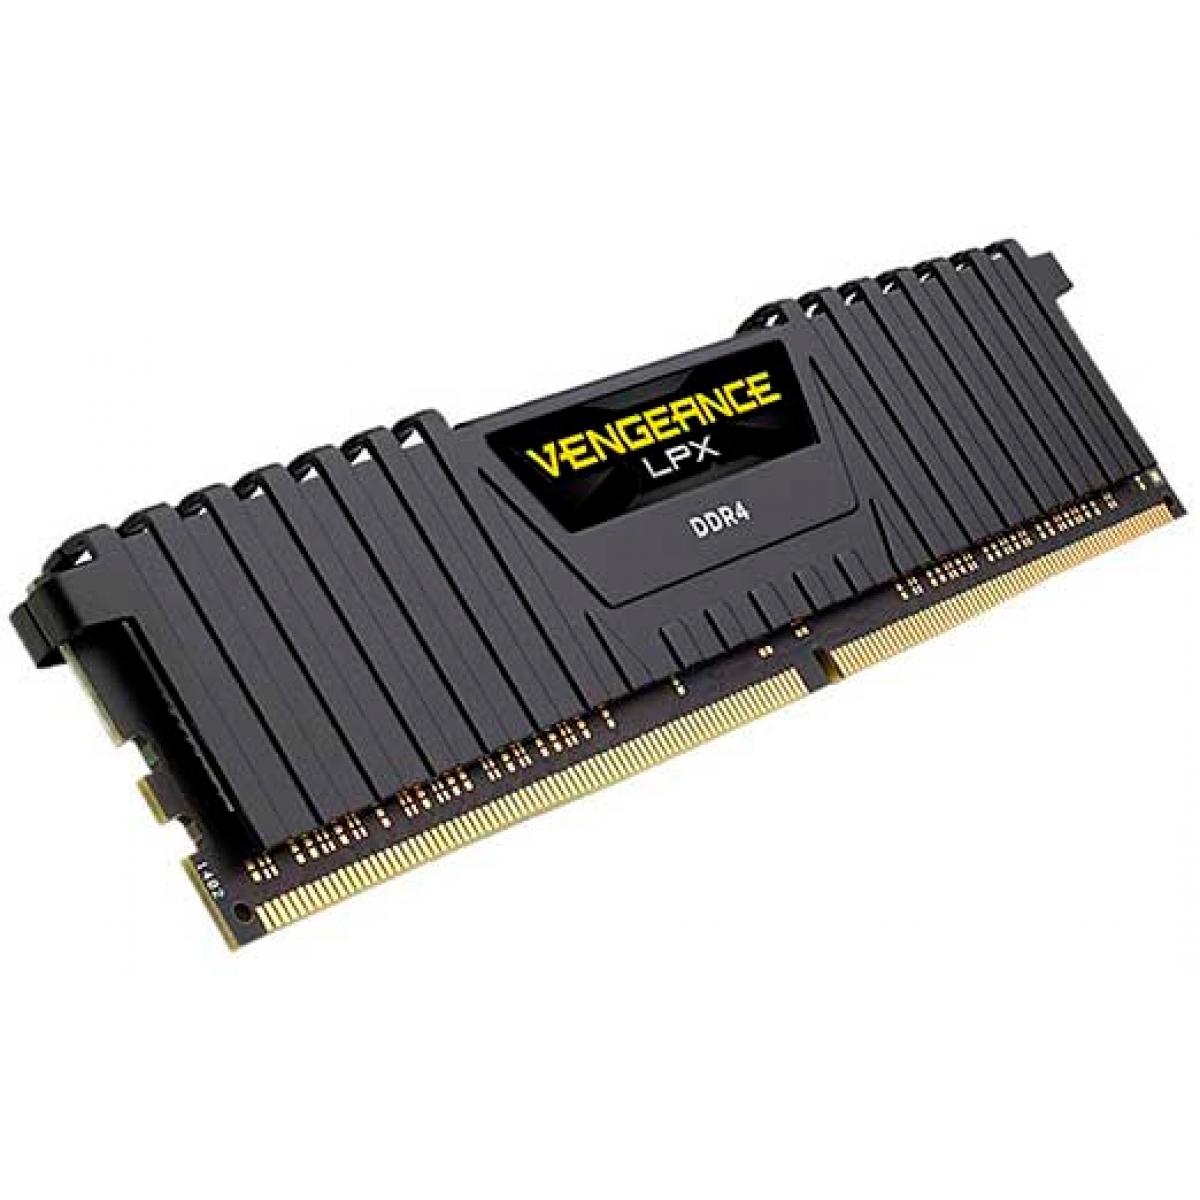 Memória DDR4 Corsair Vengeance LPX, 8GB (2x4GB) 3000MHz, CMK8GX4M2C3000C16 